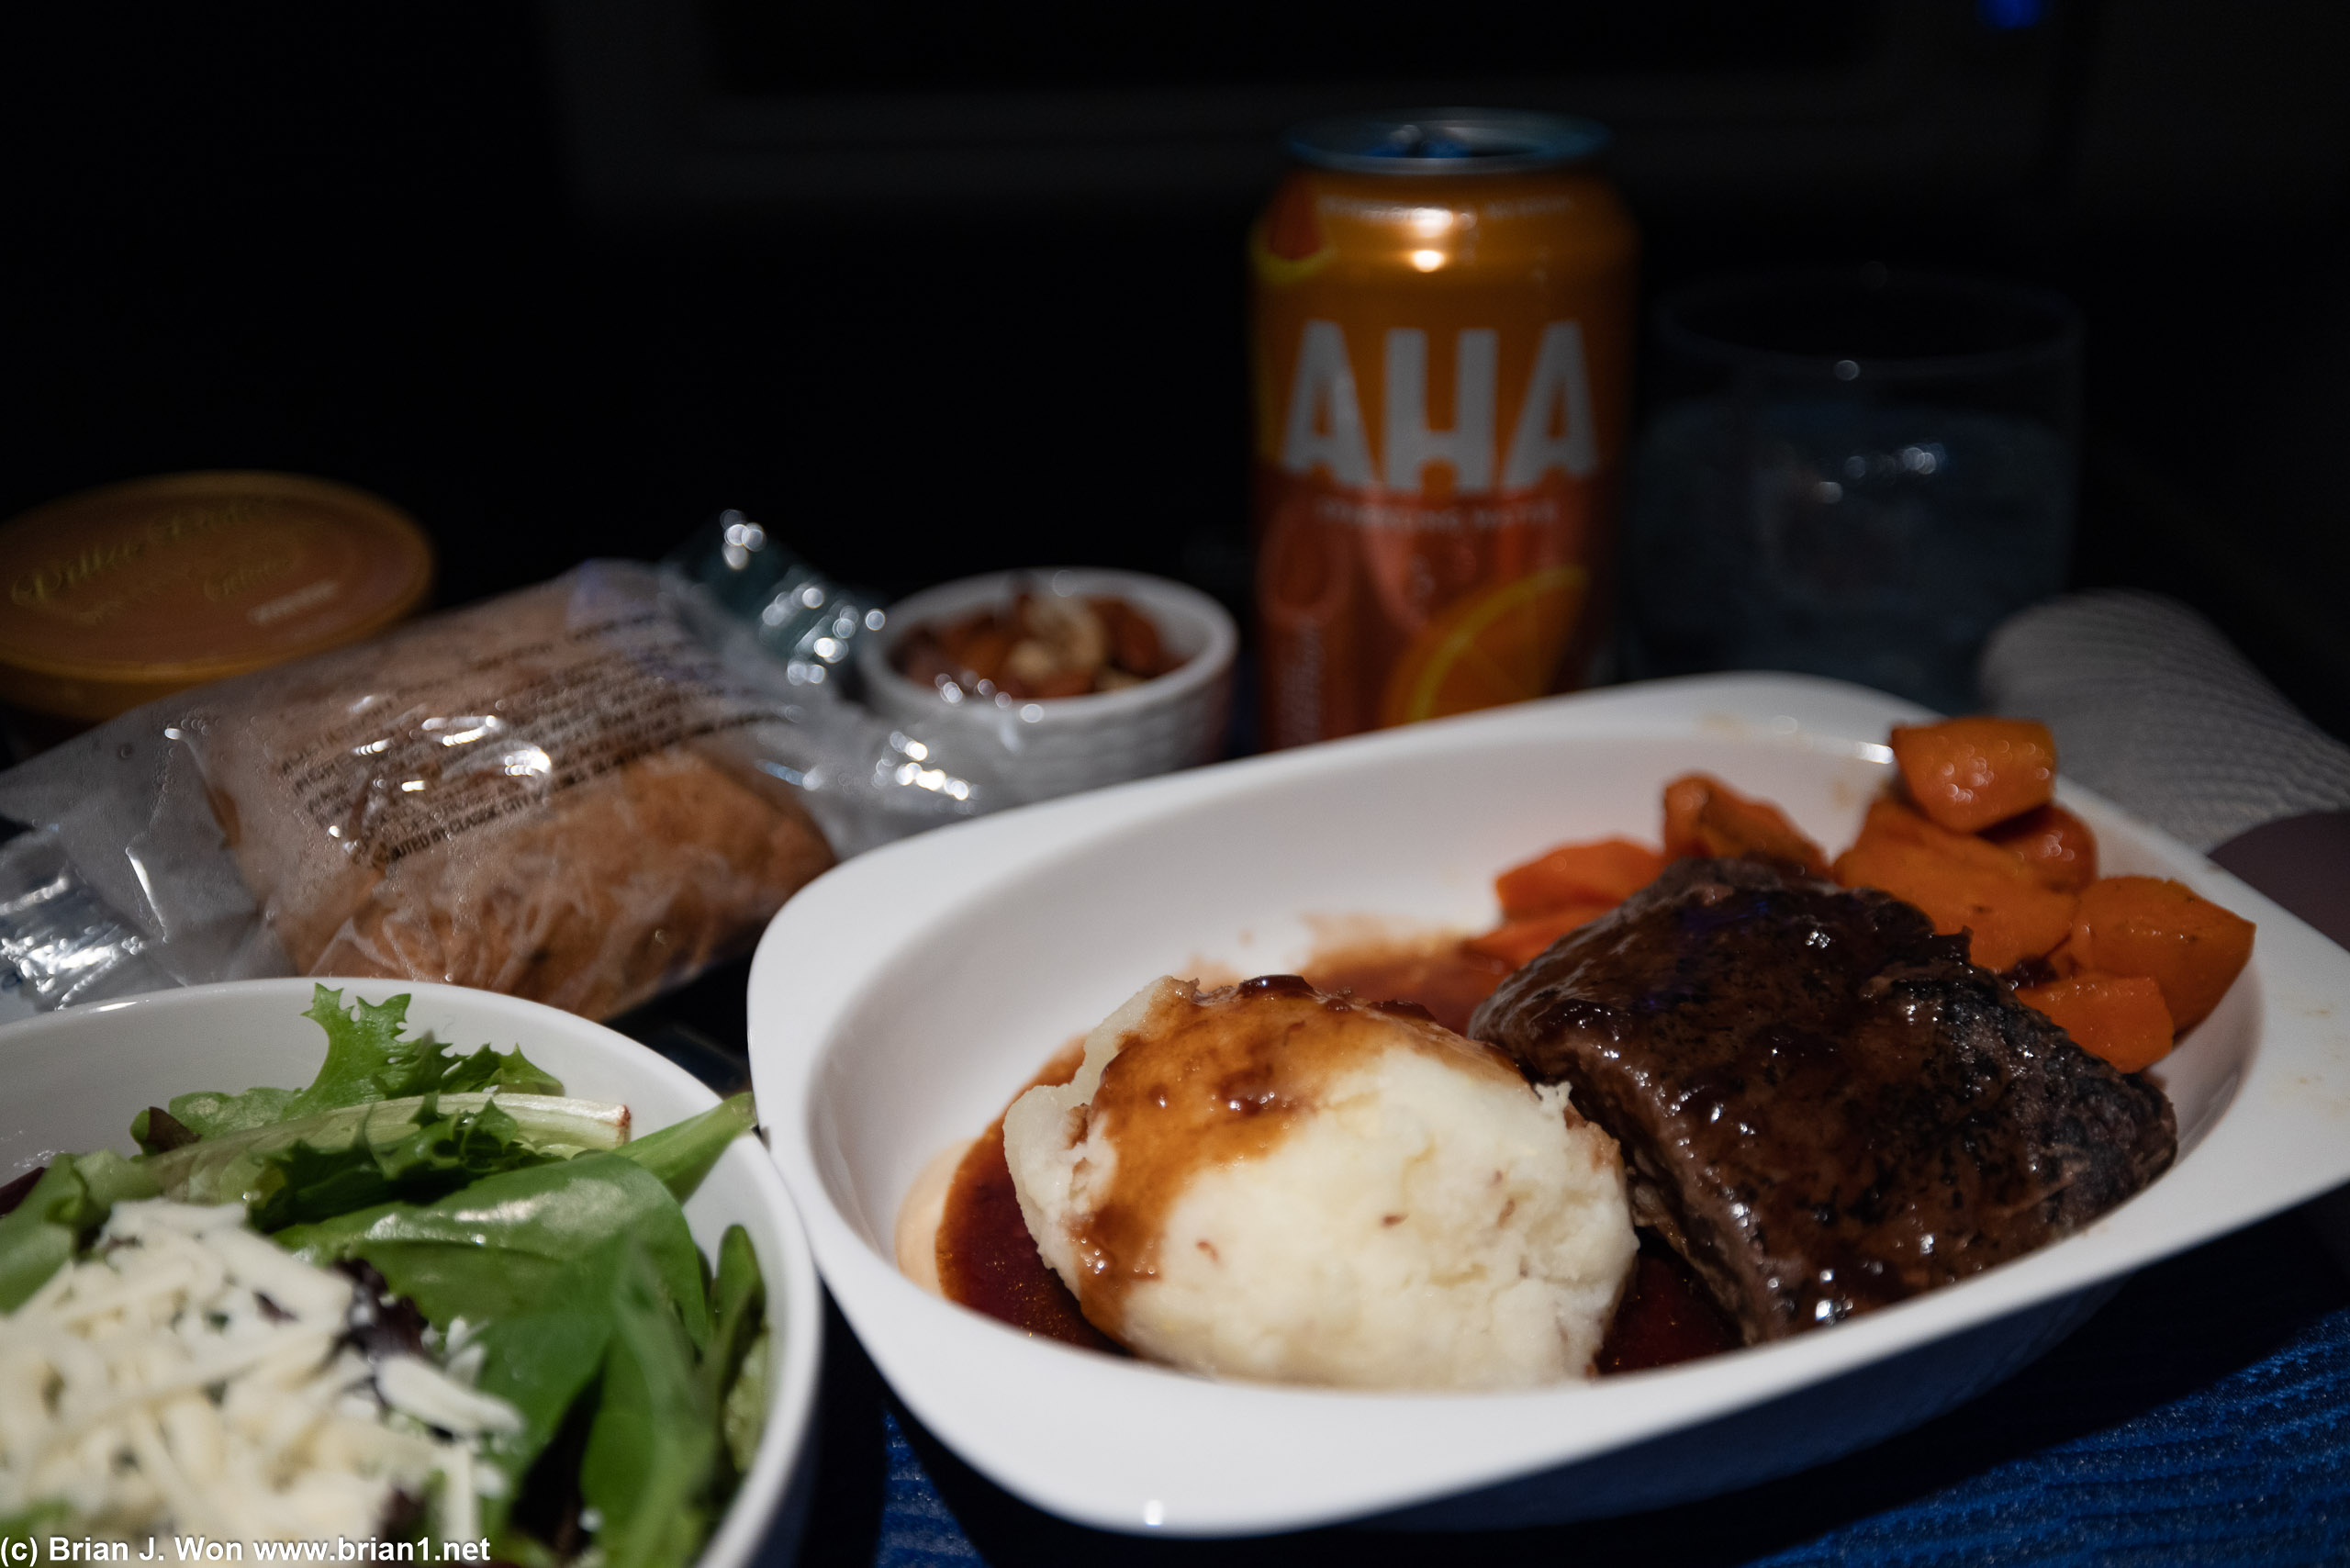 Beef shortrib on the flight to Frankfurt wasn't bad.